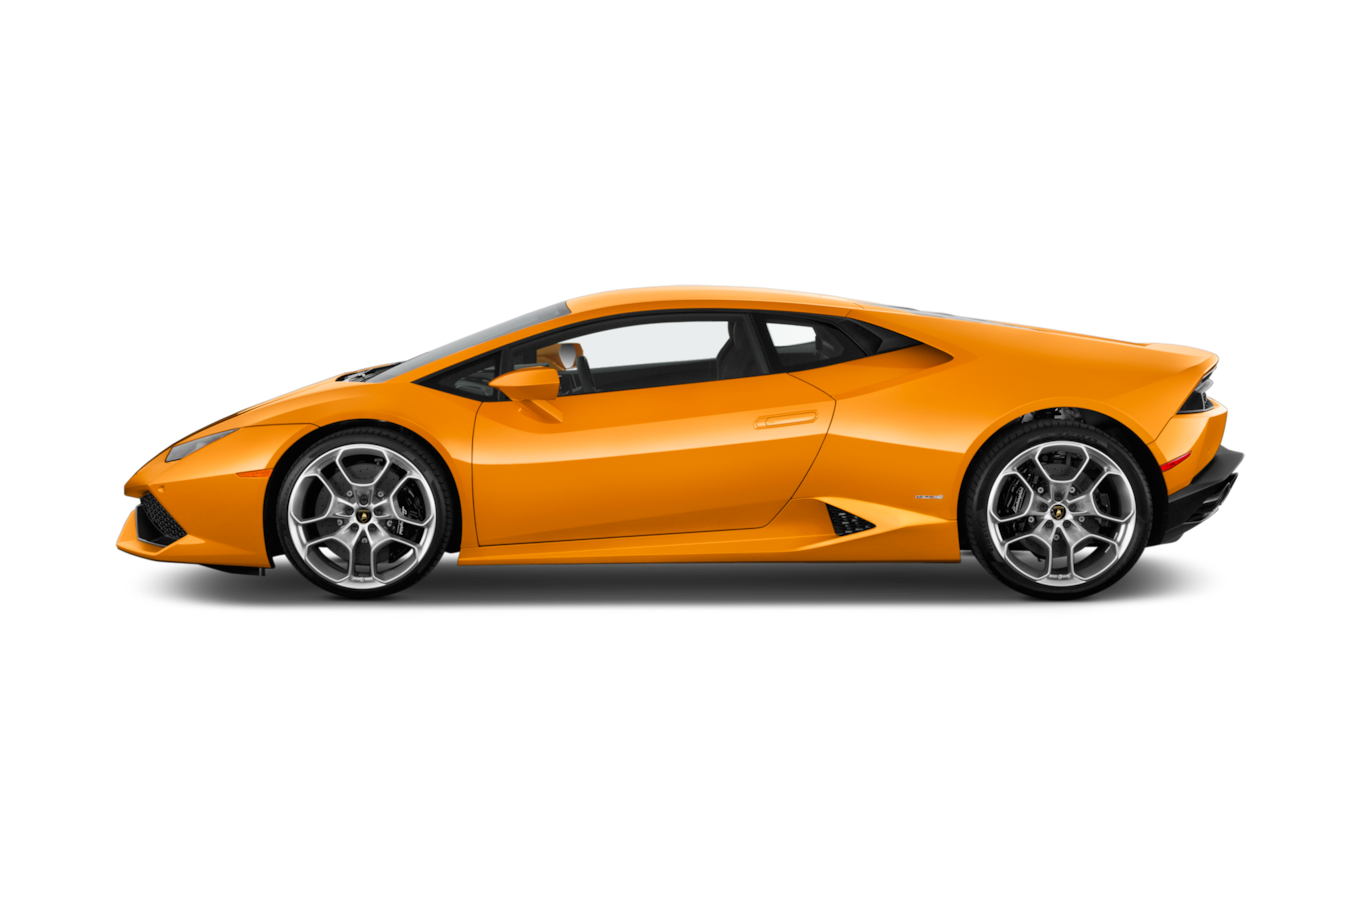 Car Lamborghini Side View Free Download Image PNG Image